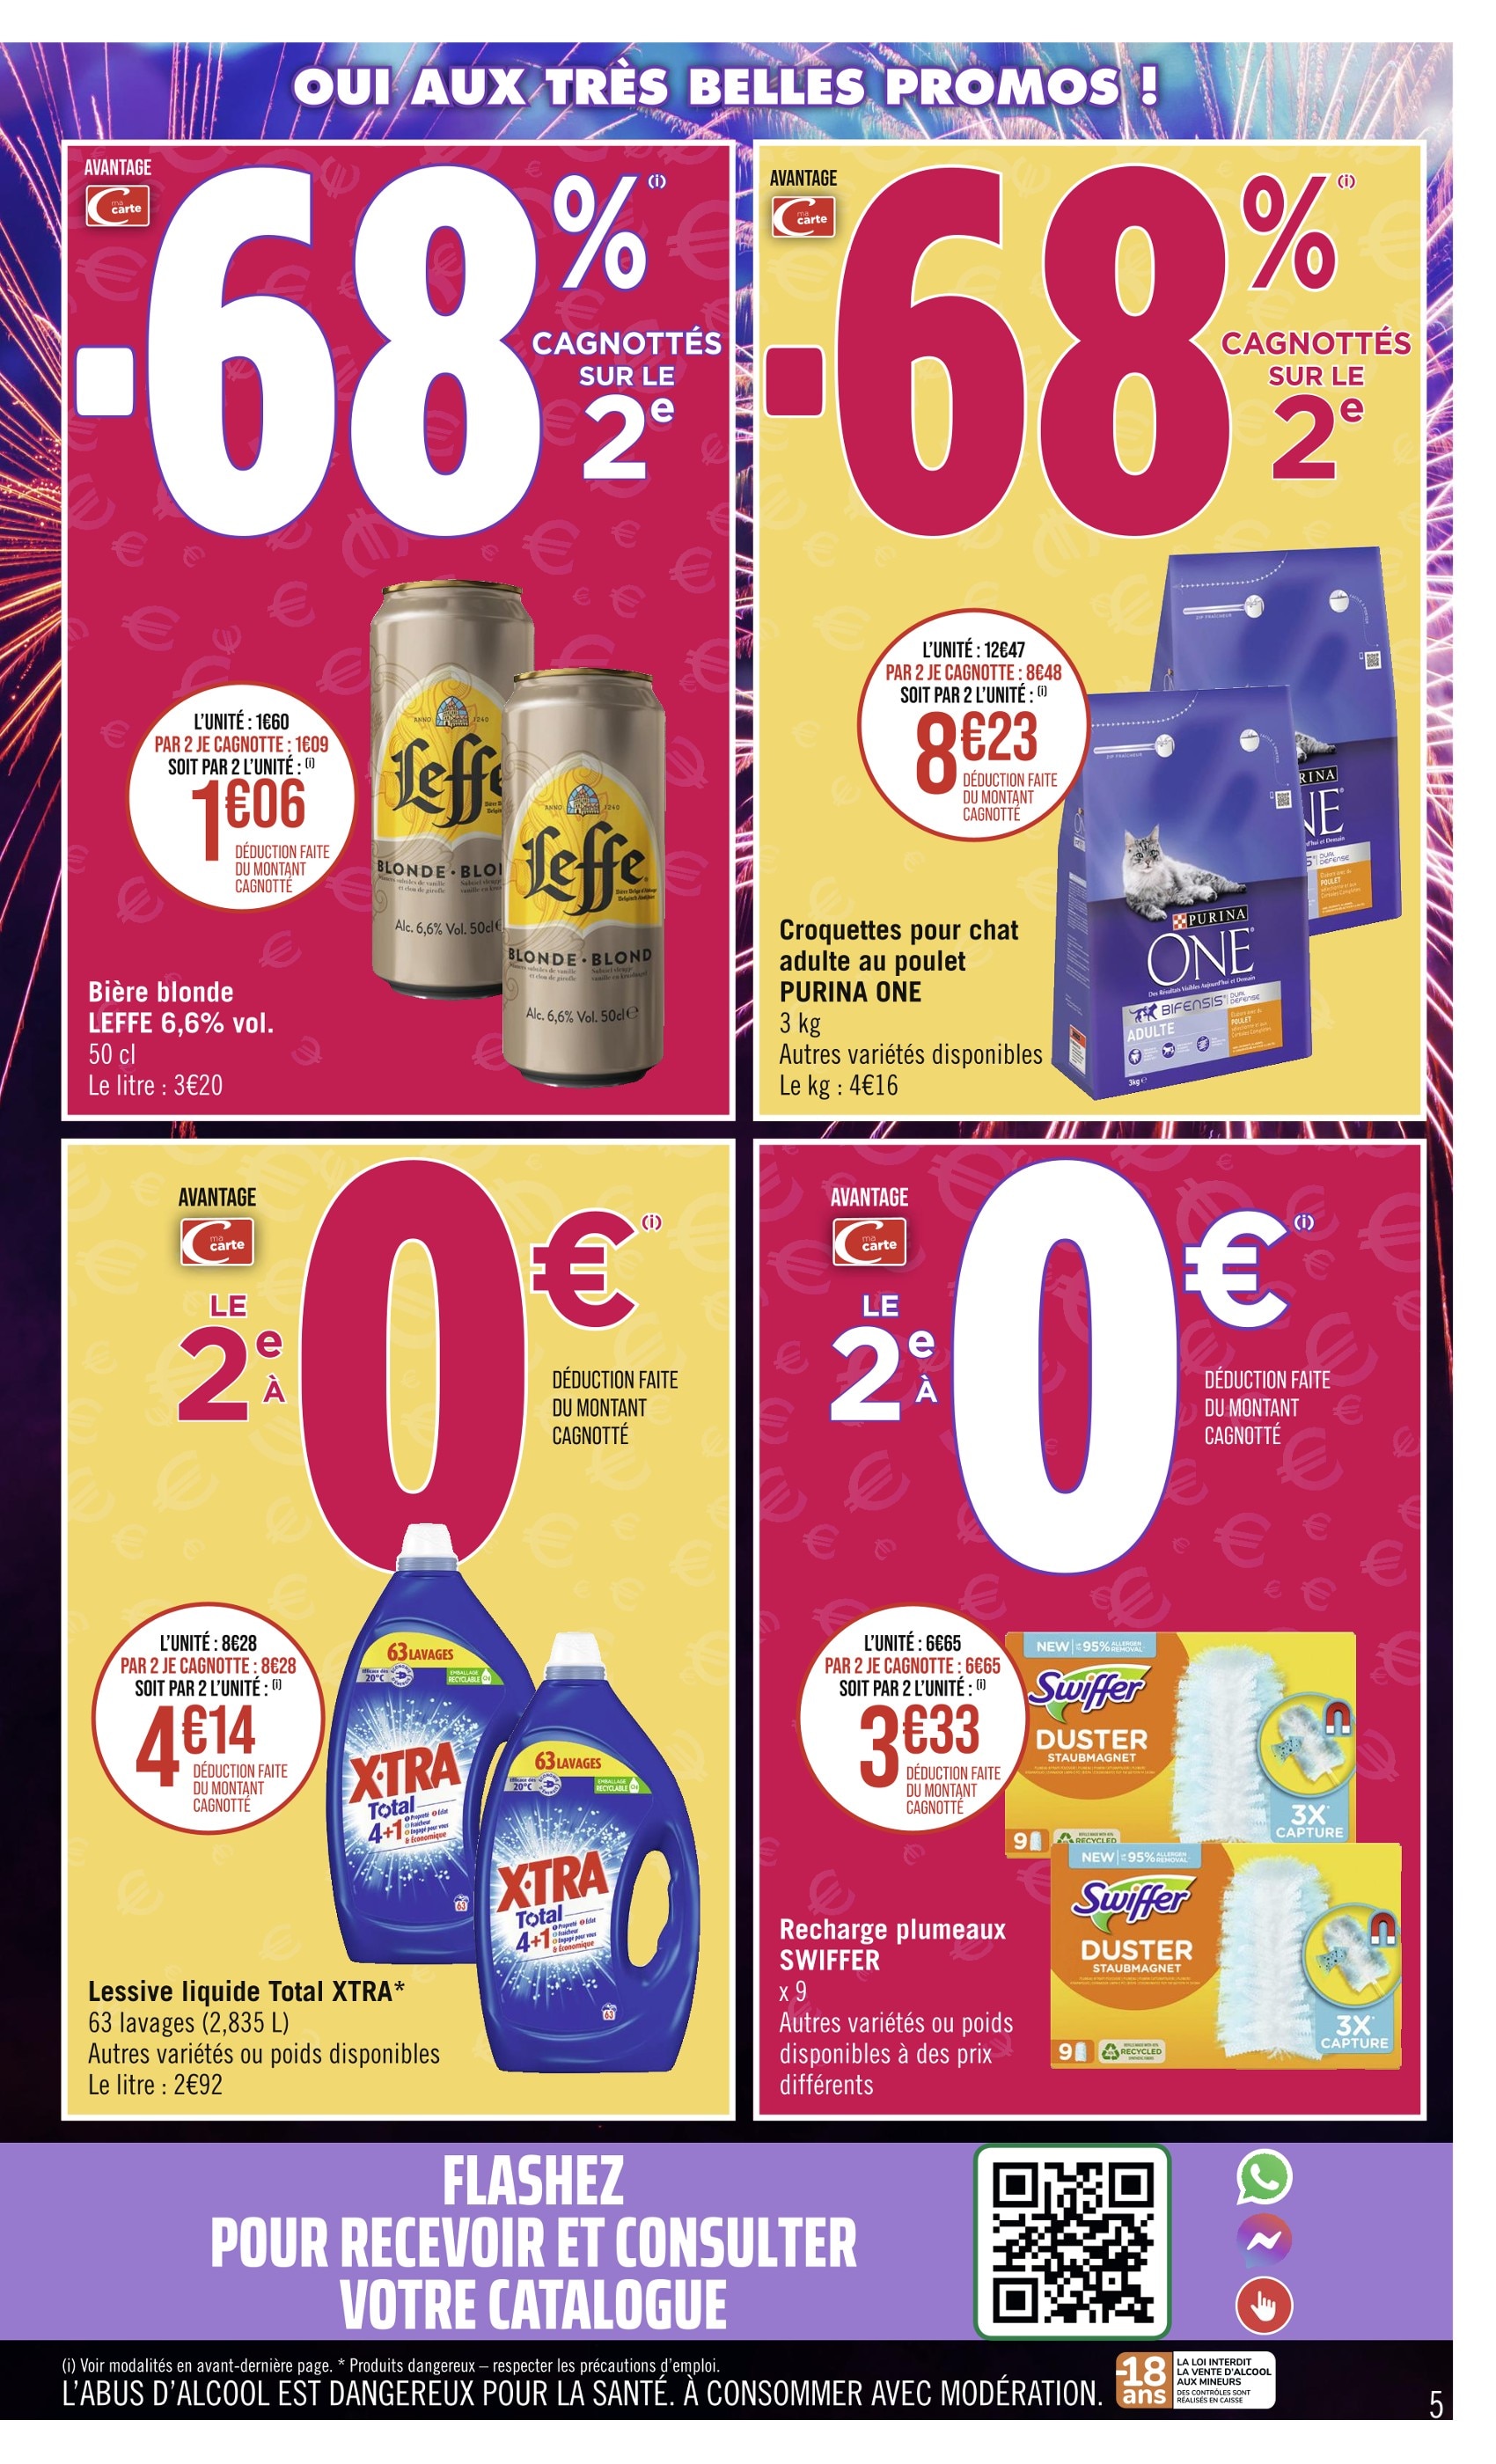 Promo Lessive liquide Total XTRA Carrefour : 31,8€